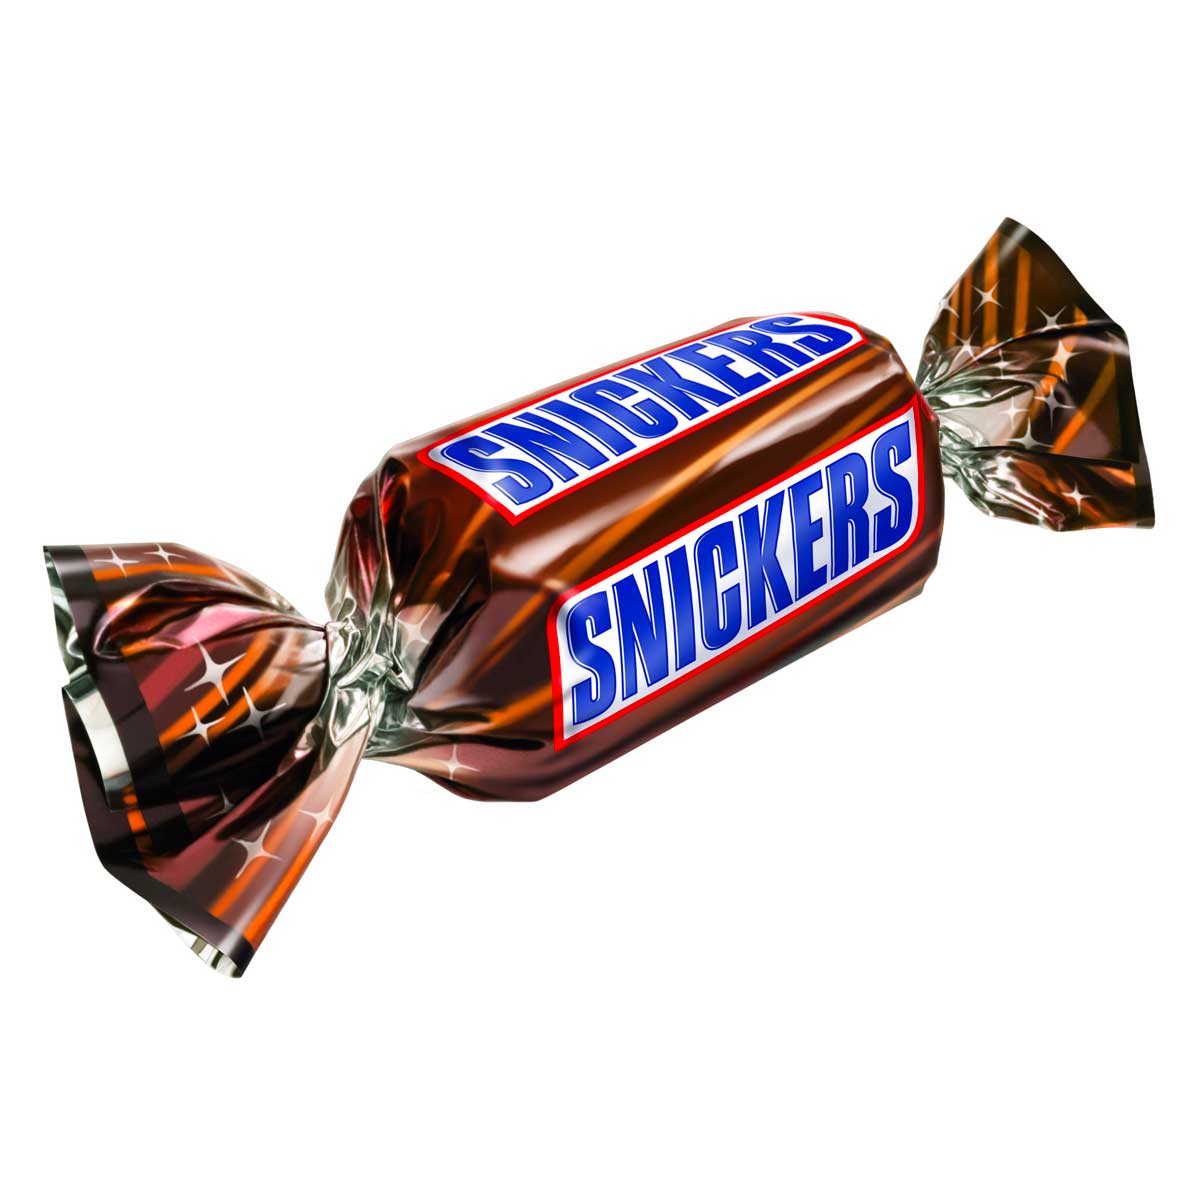 miniatures snickers, bonbons caramel chocolat,produit fin d'année